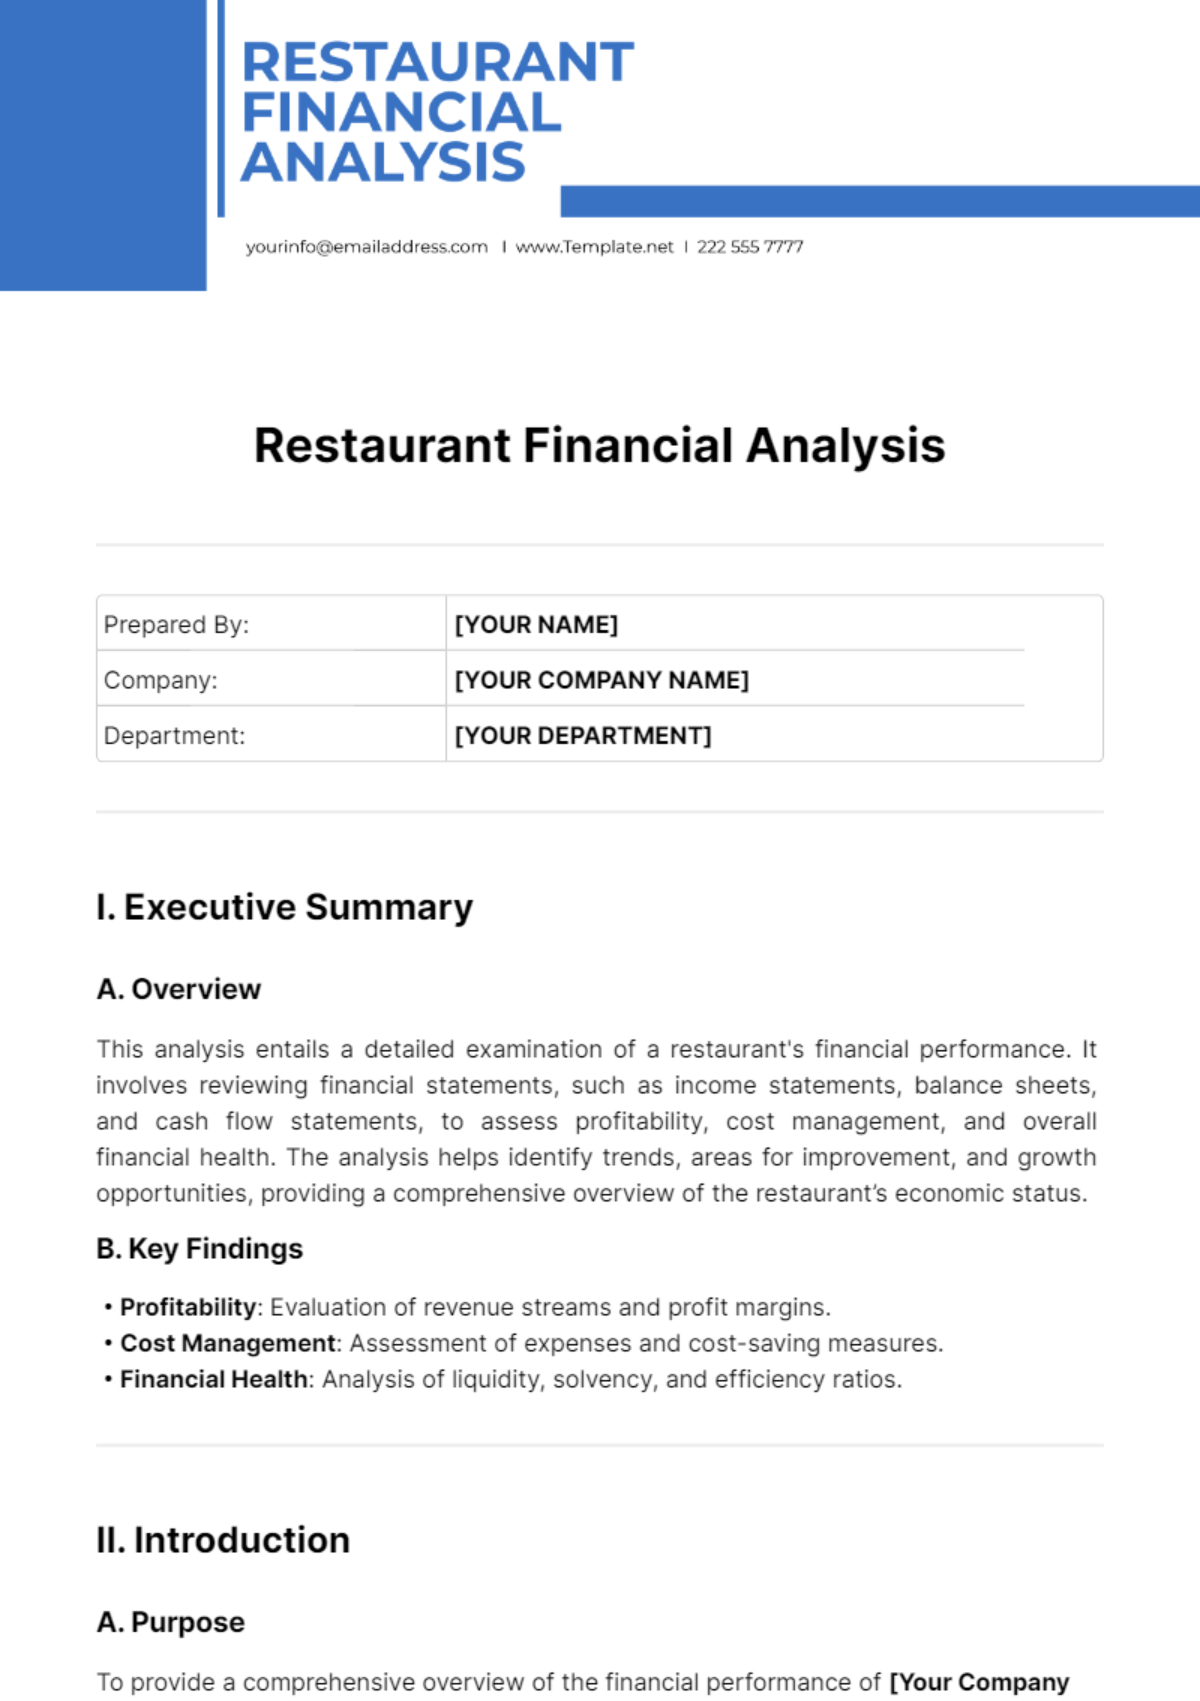 Restaurant Financial Analysis Template